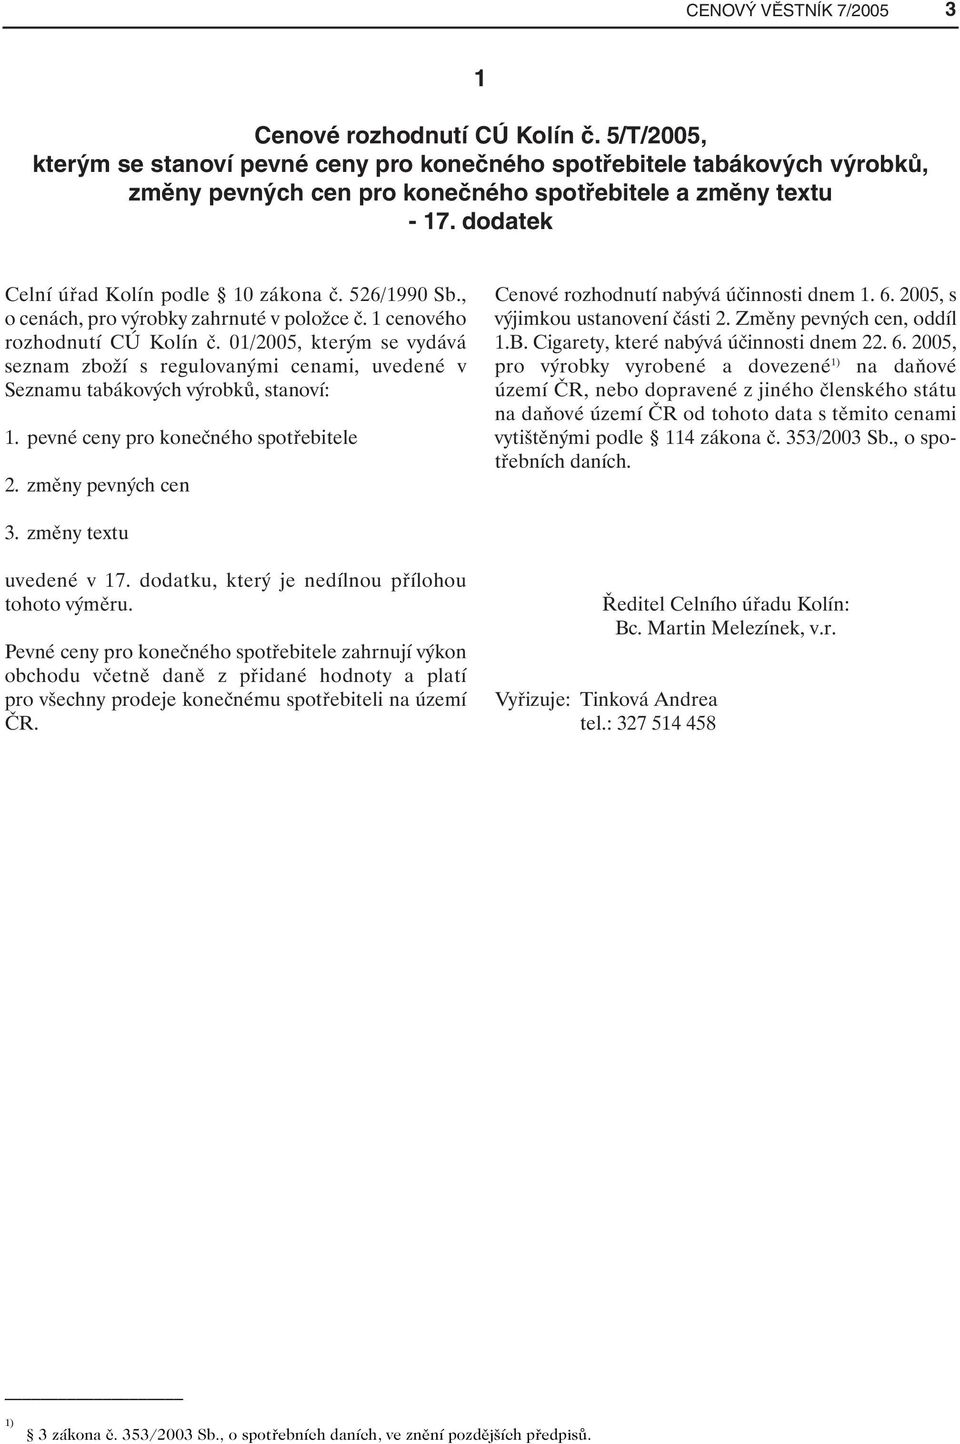 526/1990 Sb., o cenách, pro výrobky zahrnuté v položce č. 1 cenového rozhodnutí CÚ Kolín č.